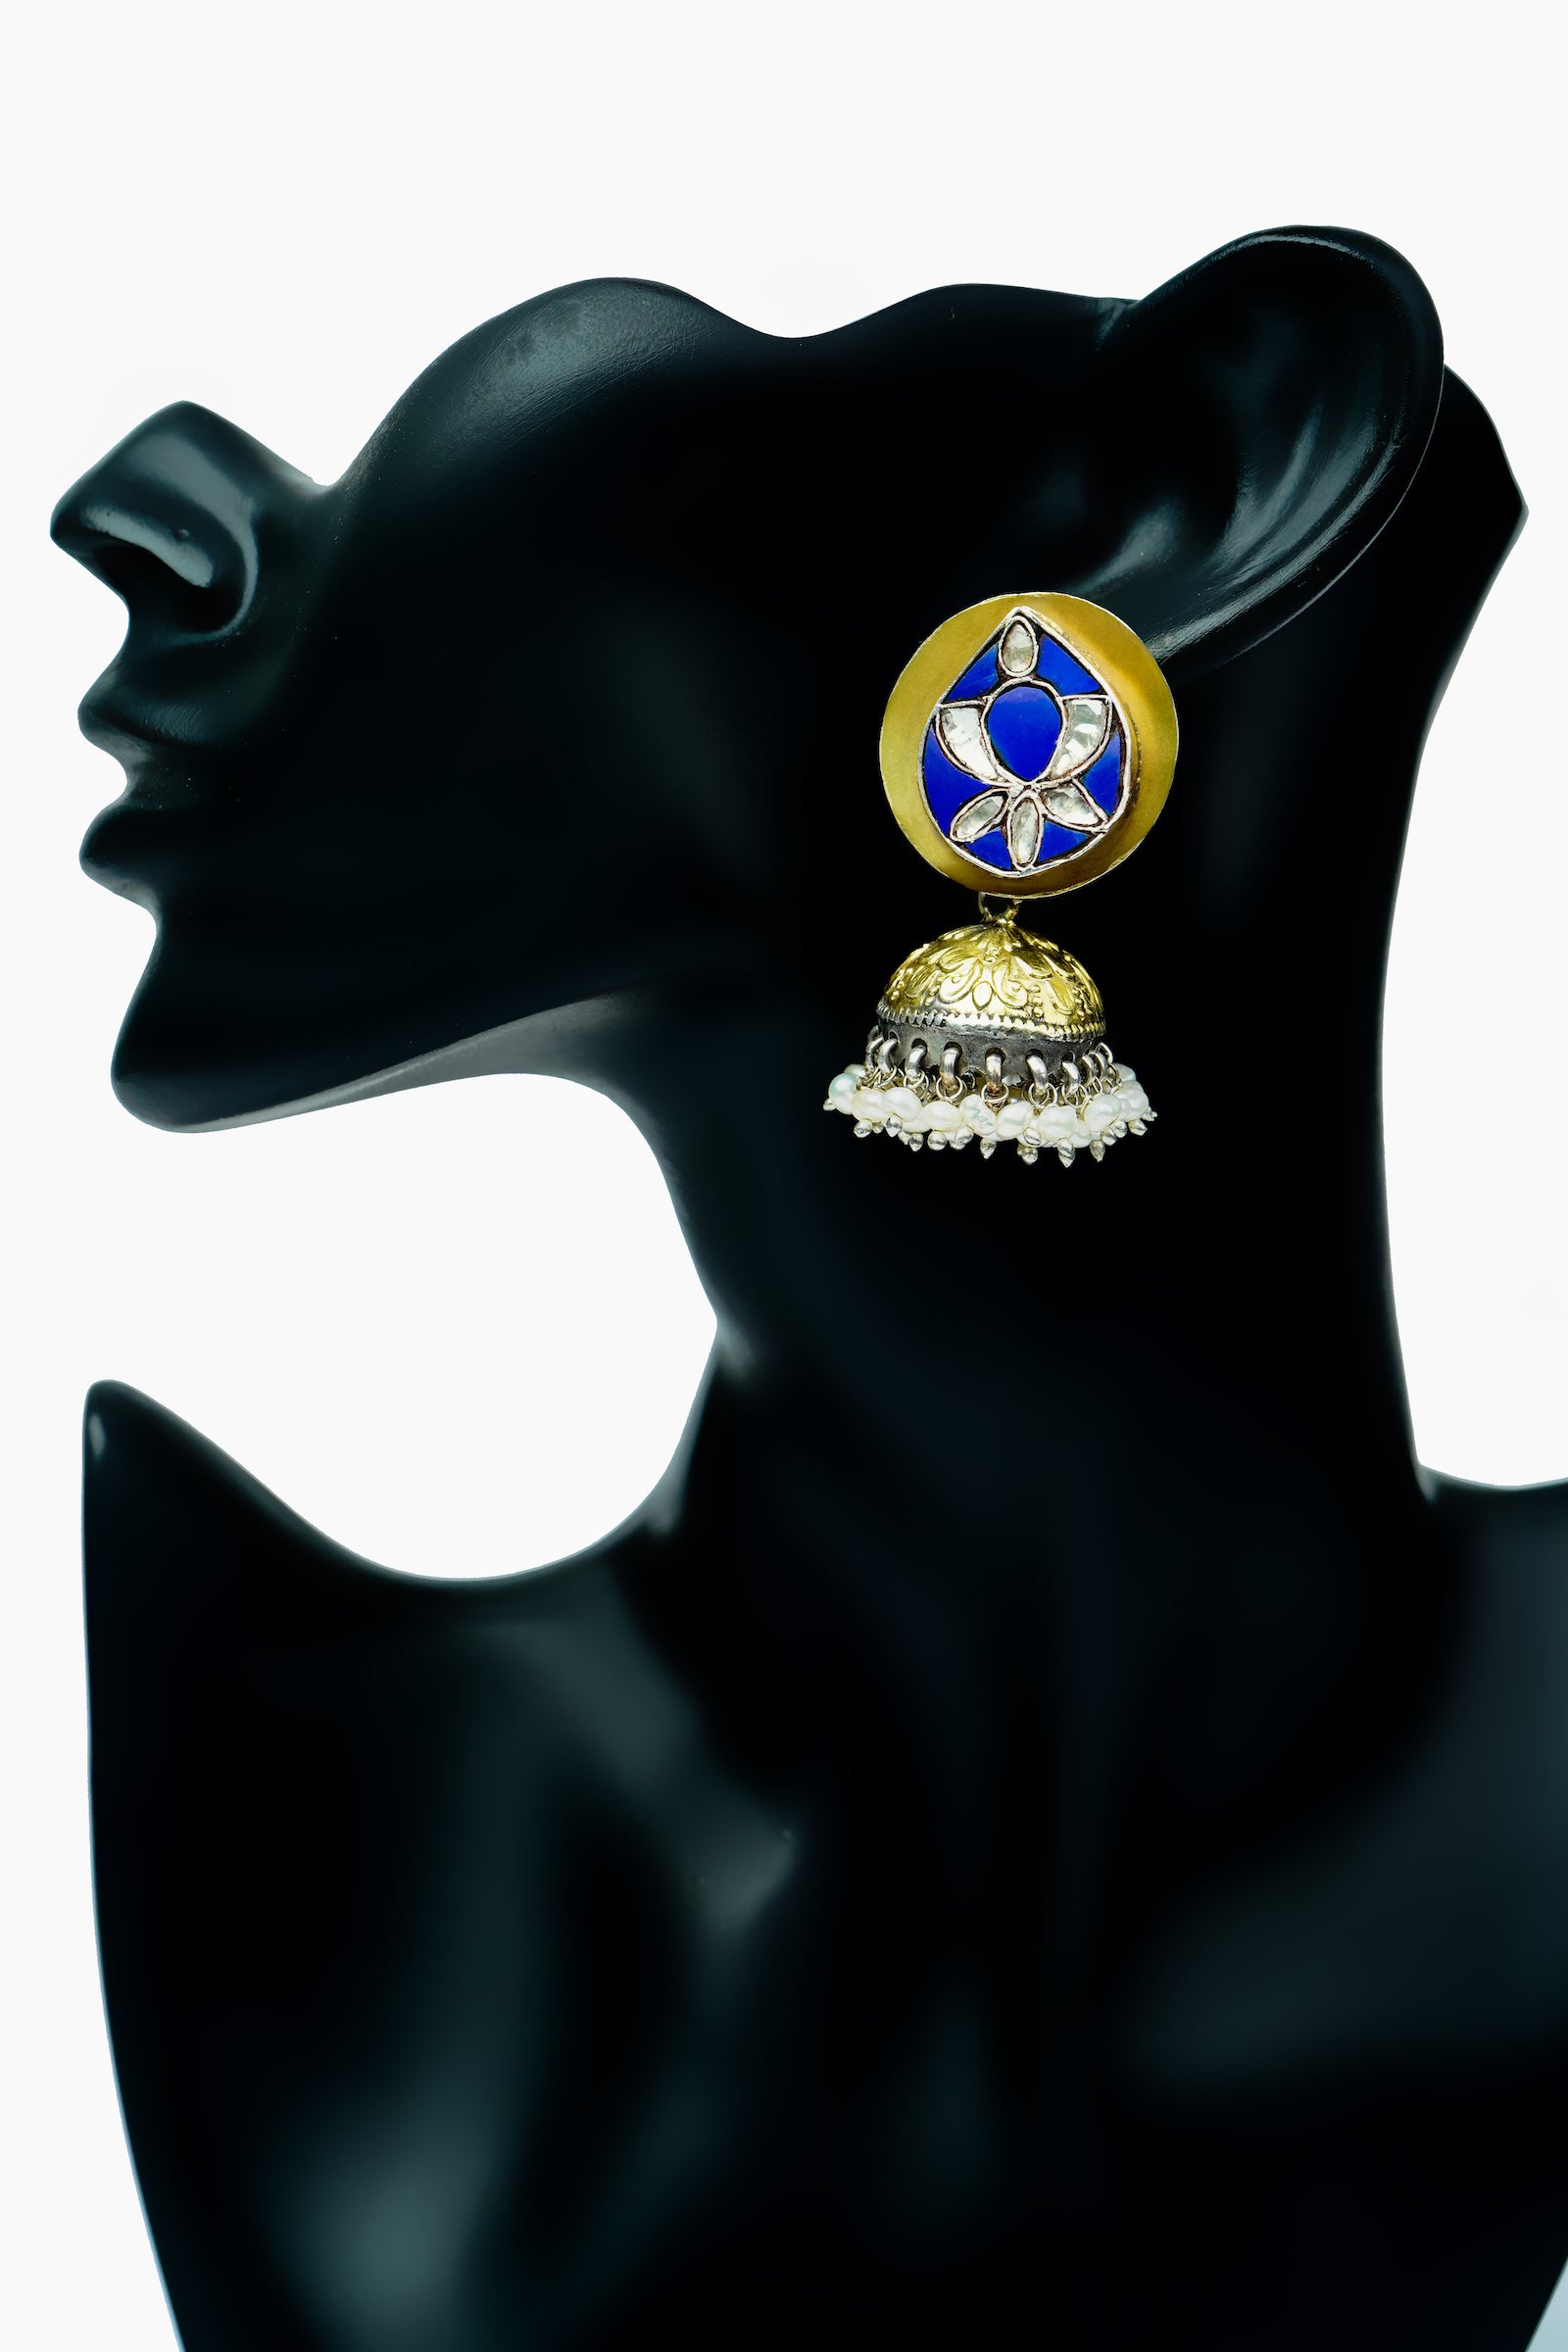 Neeta Boochra Signature Silver Lotus Blue Jhumki Earrings - Neeta Boochra Jewellery